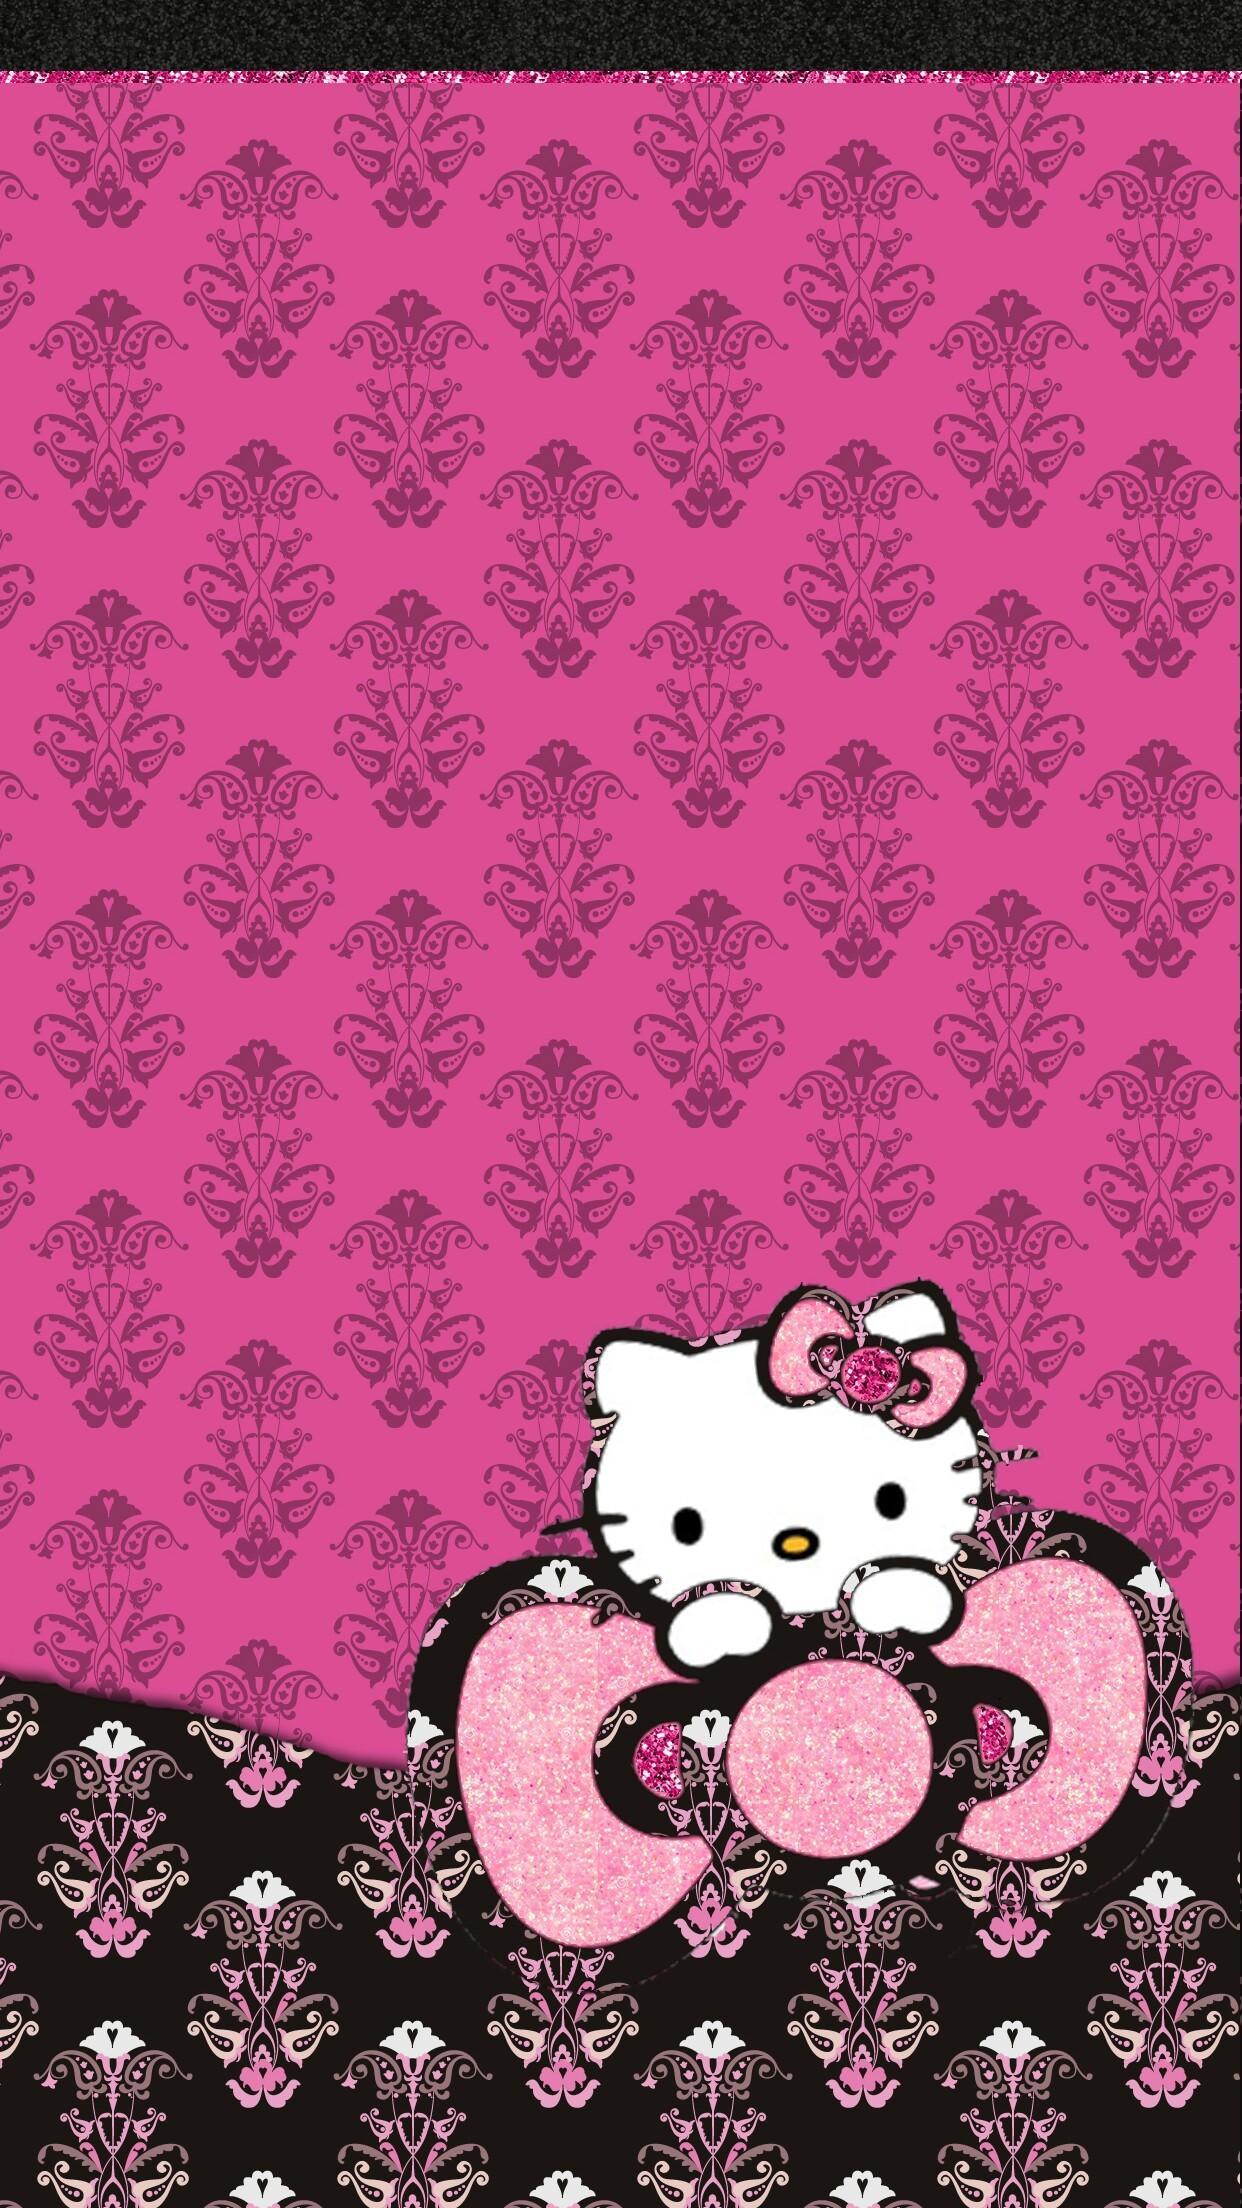 Dark hello pink wallpaper kitty 10+ Ide